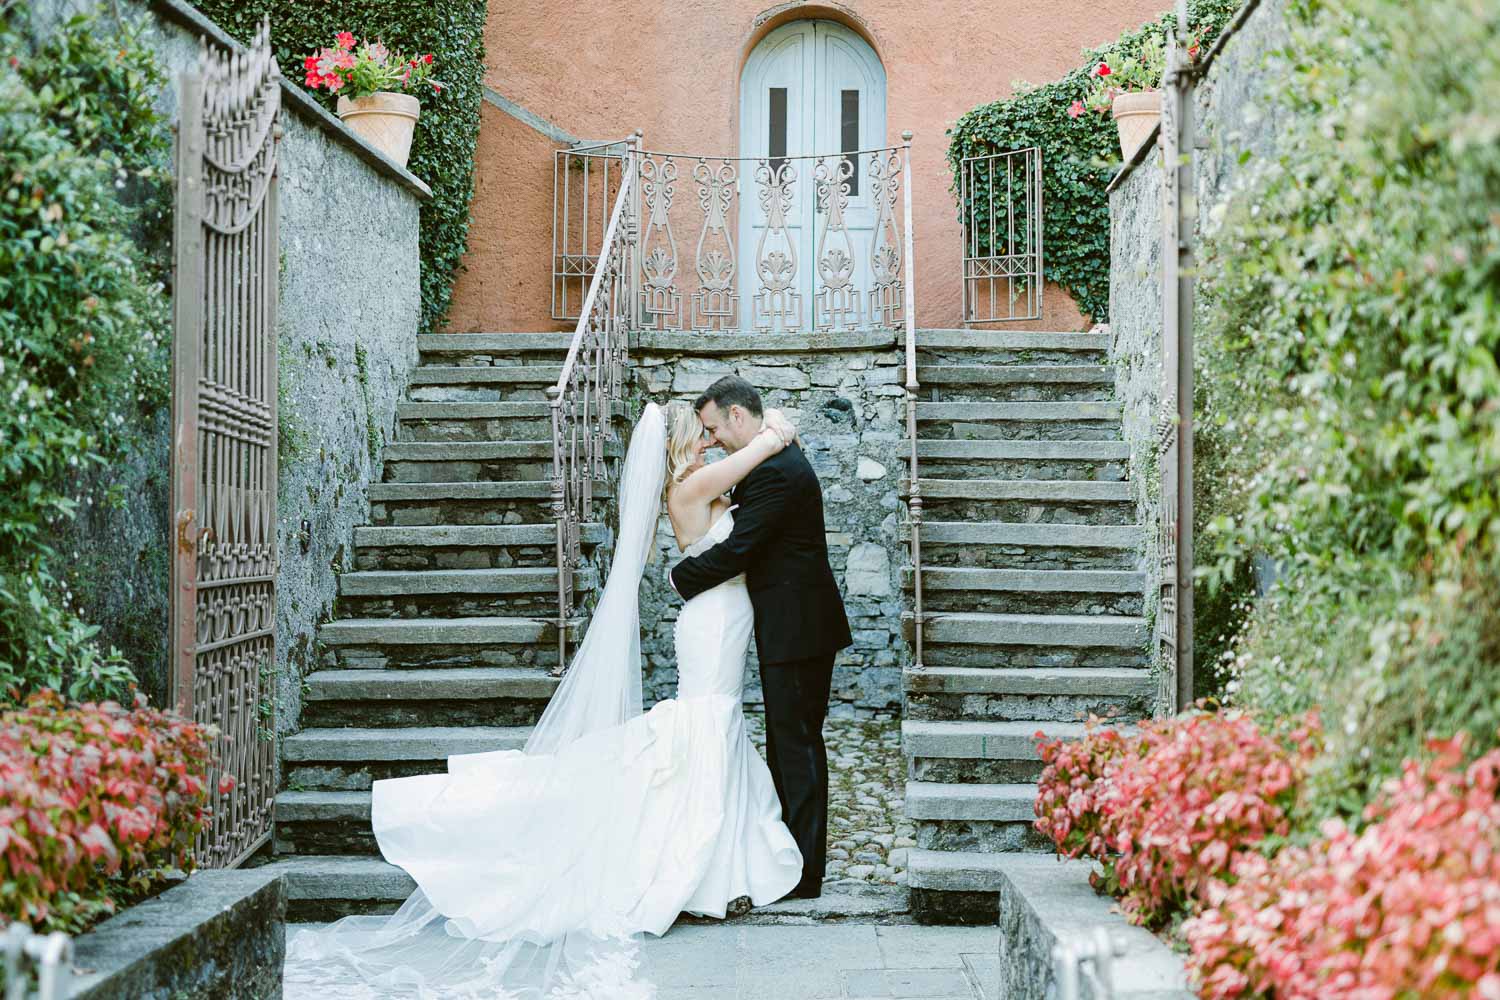 Explore Italy Favourite Wedding Venues